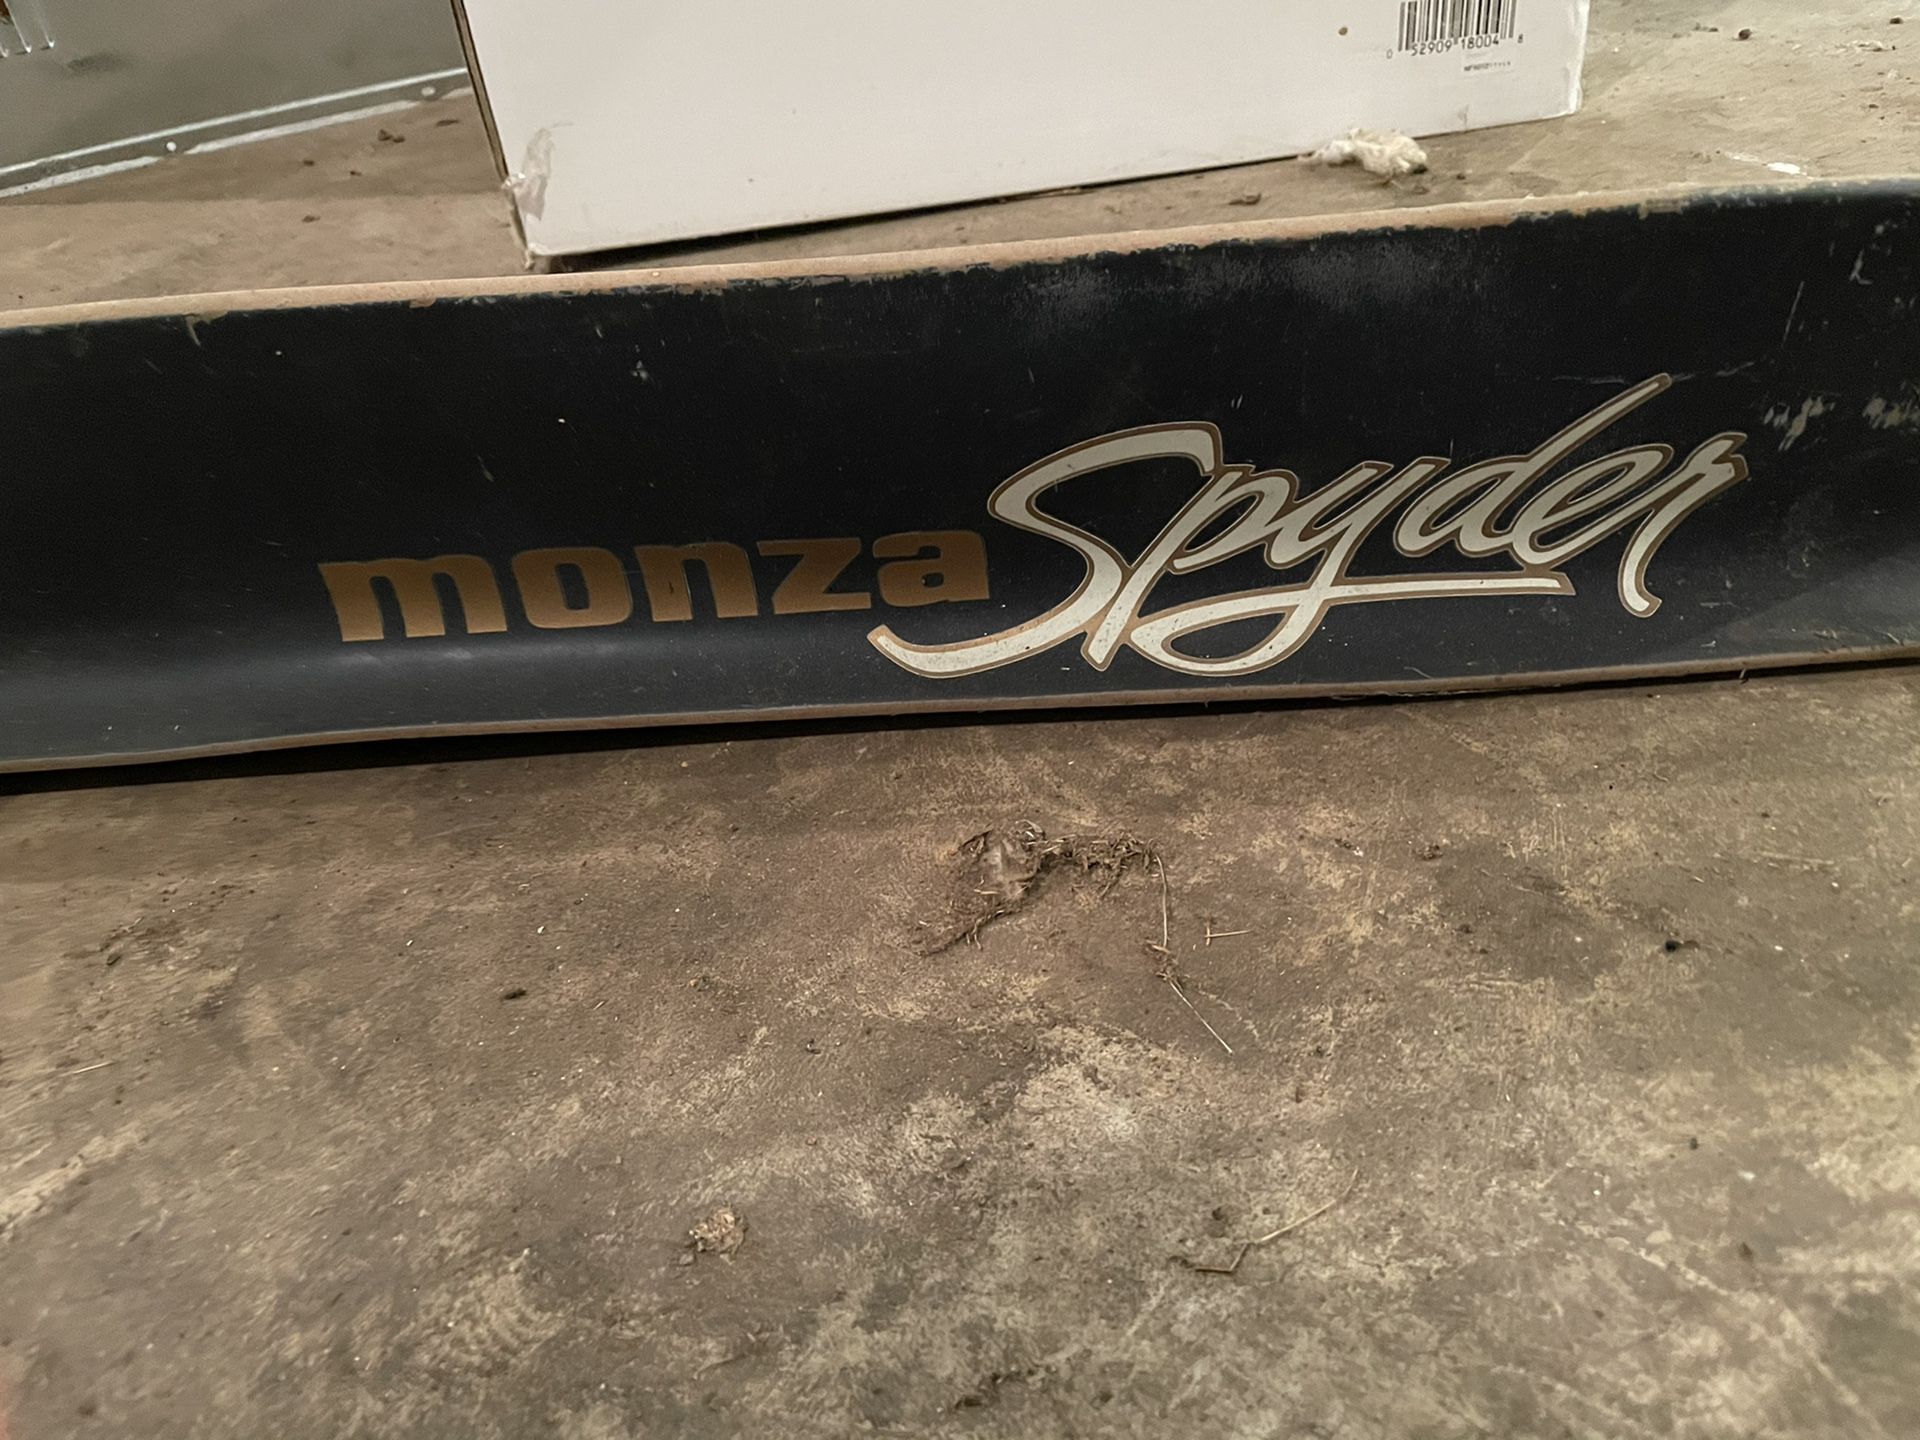 Chevy Monza Spyder rear spoiler